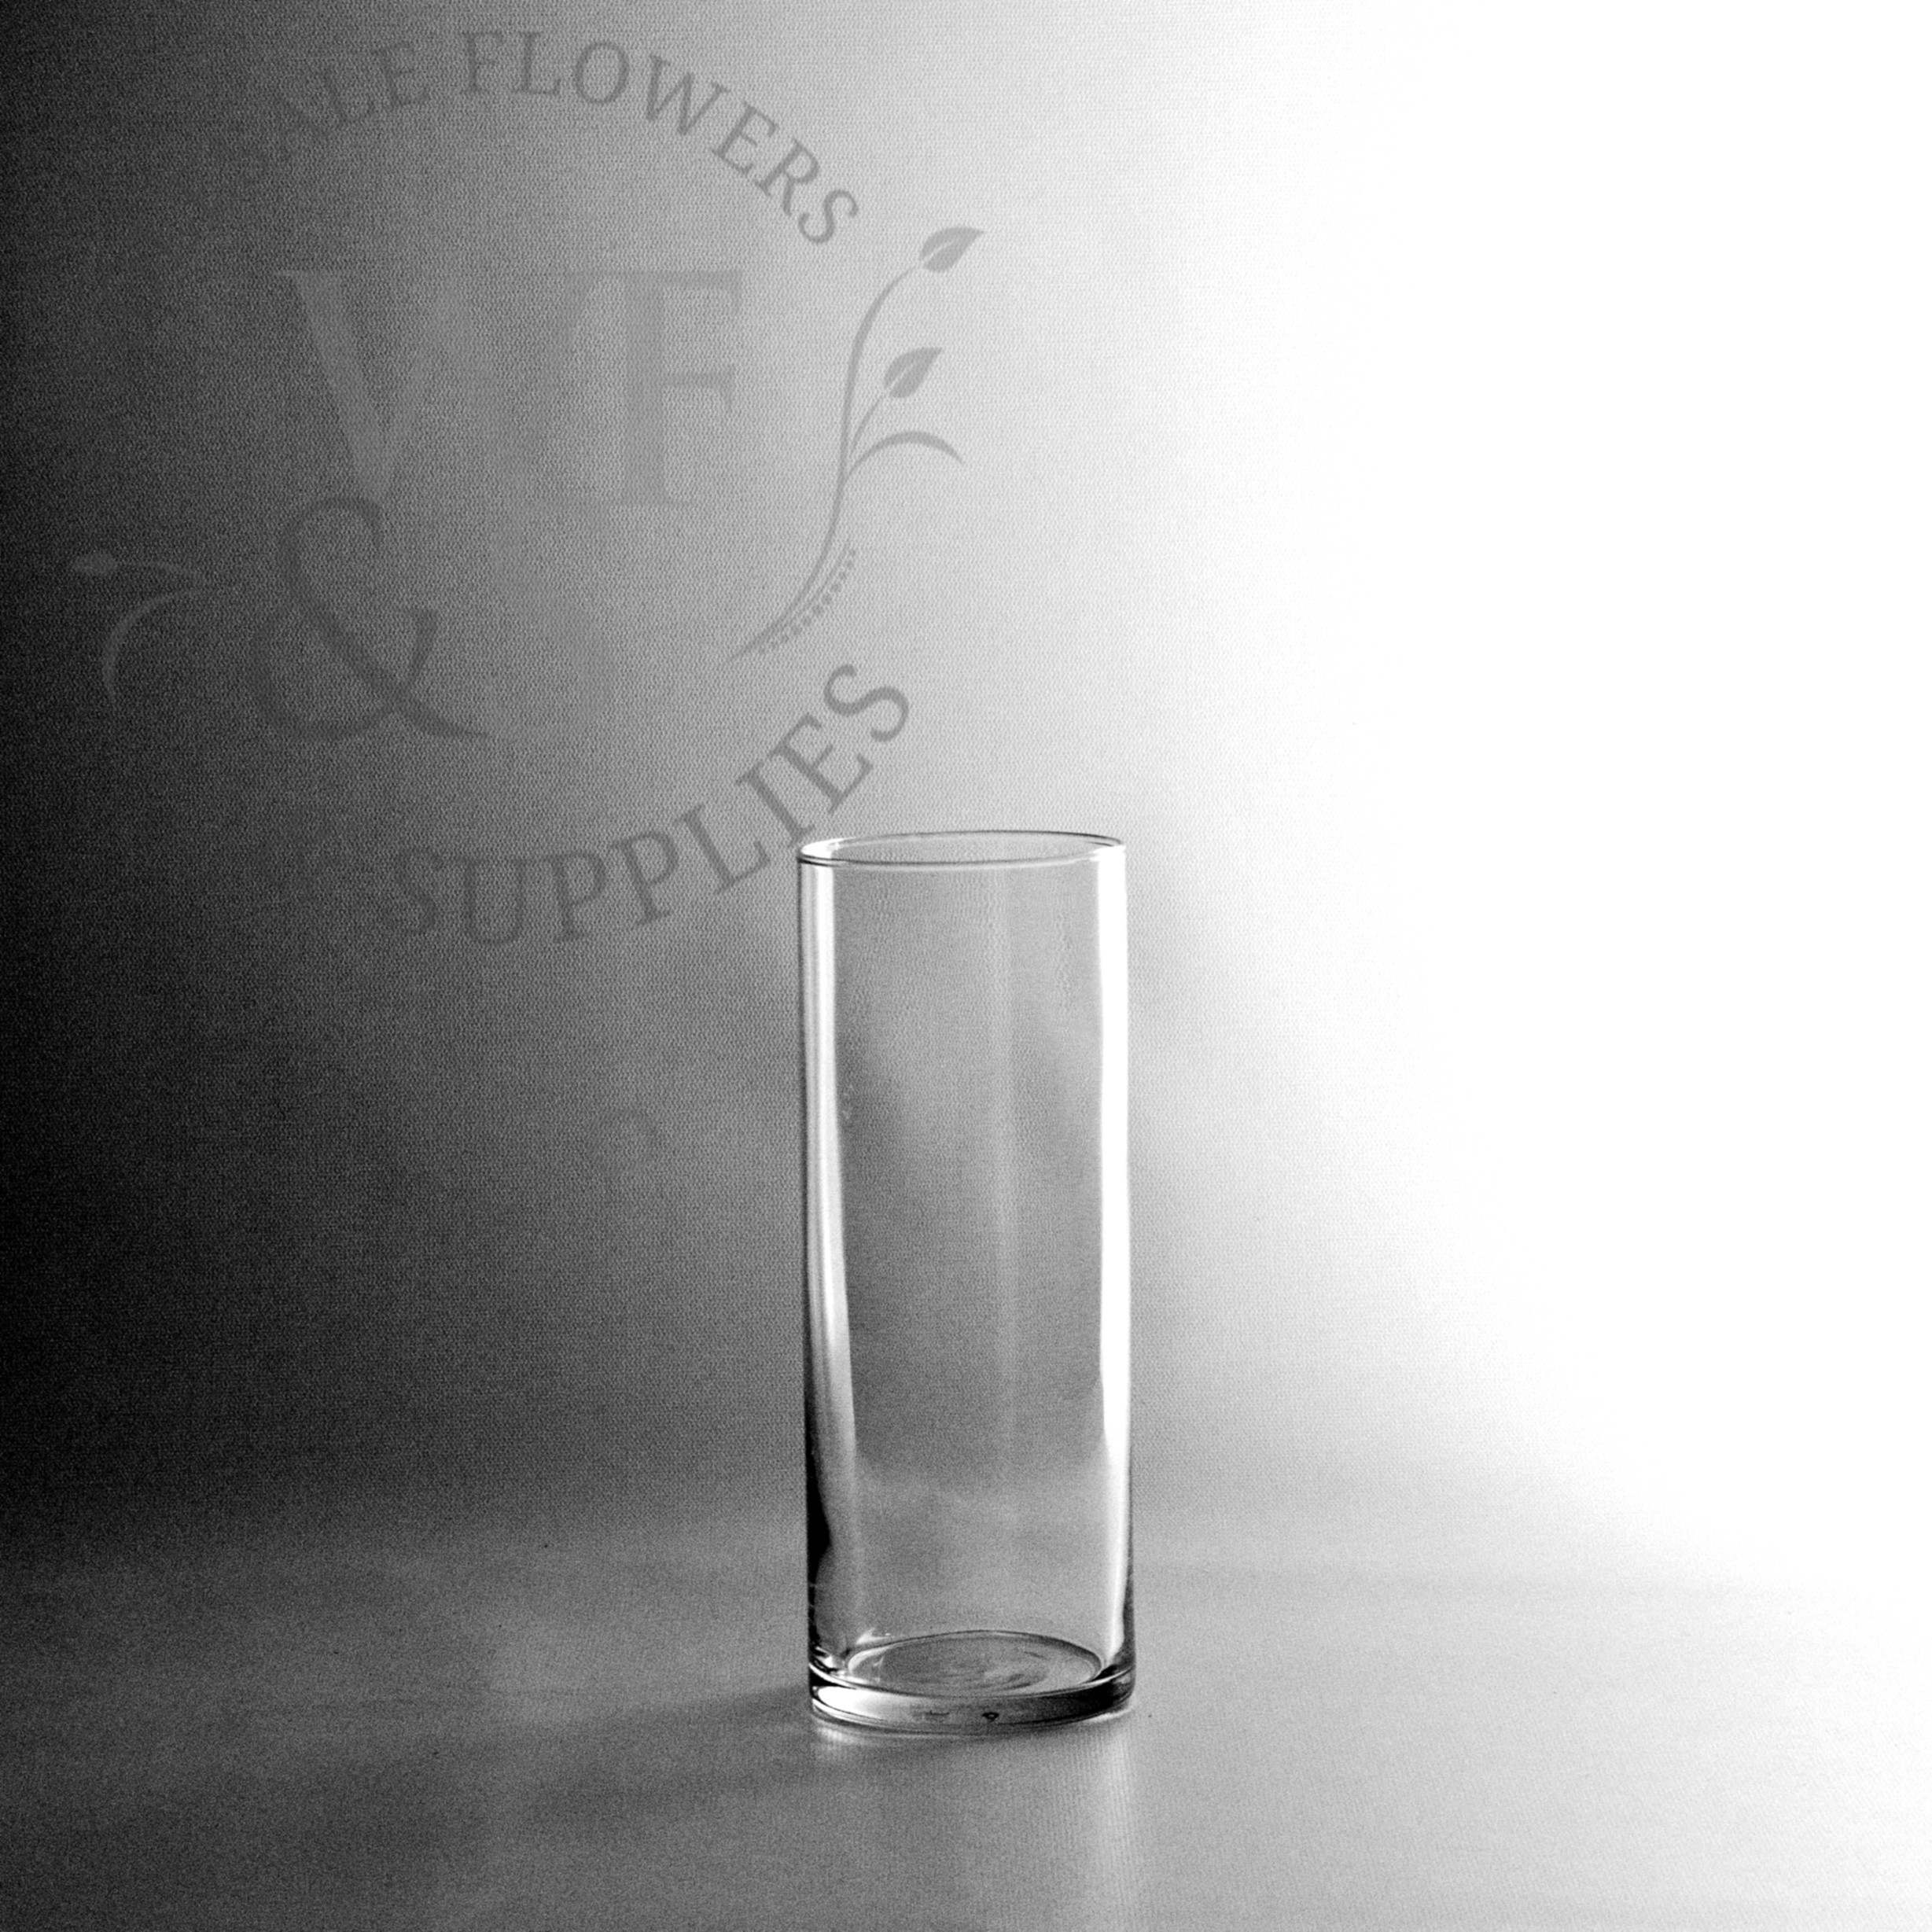 16 eiffel tower vases wholesale of why you should not go to glass vases wholesale glass vases throughout crystal glass vases wholesale elegant cylinder vases wholesale